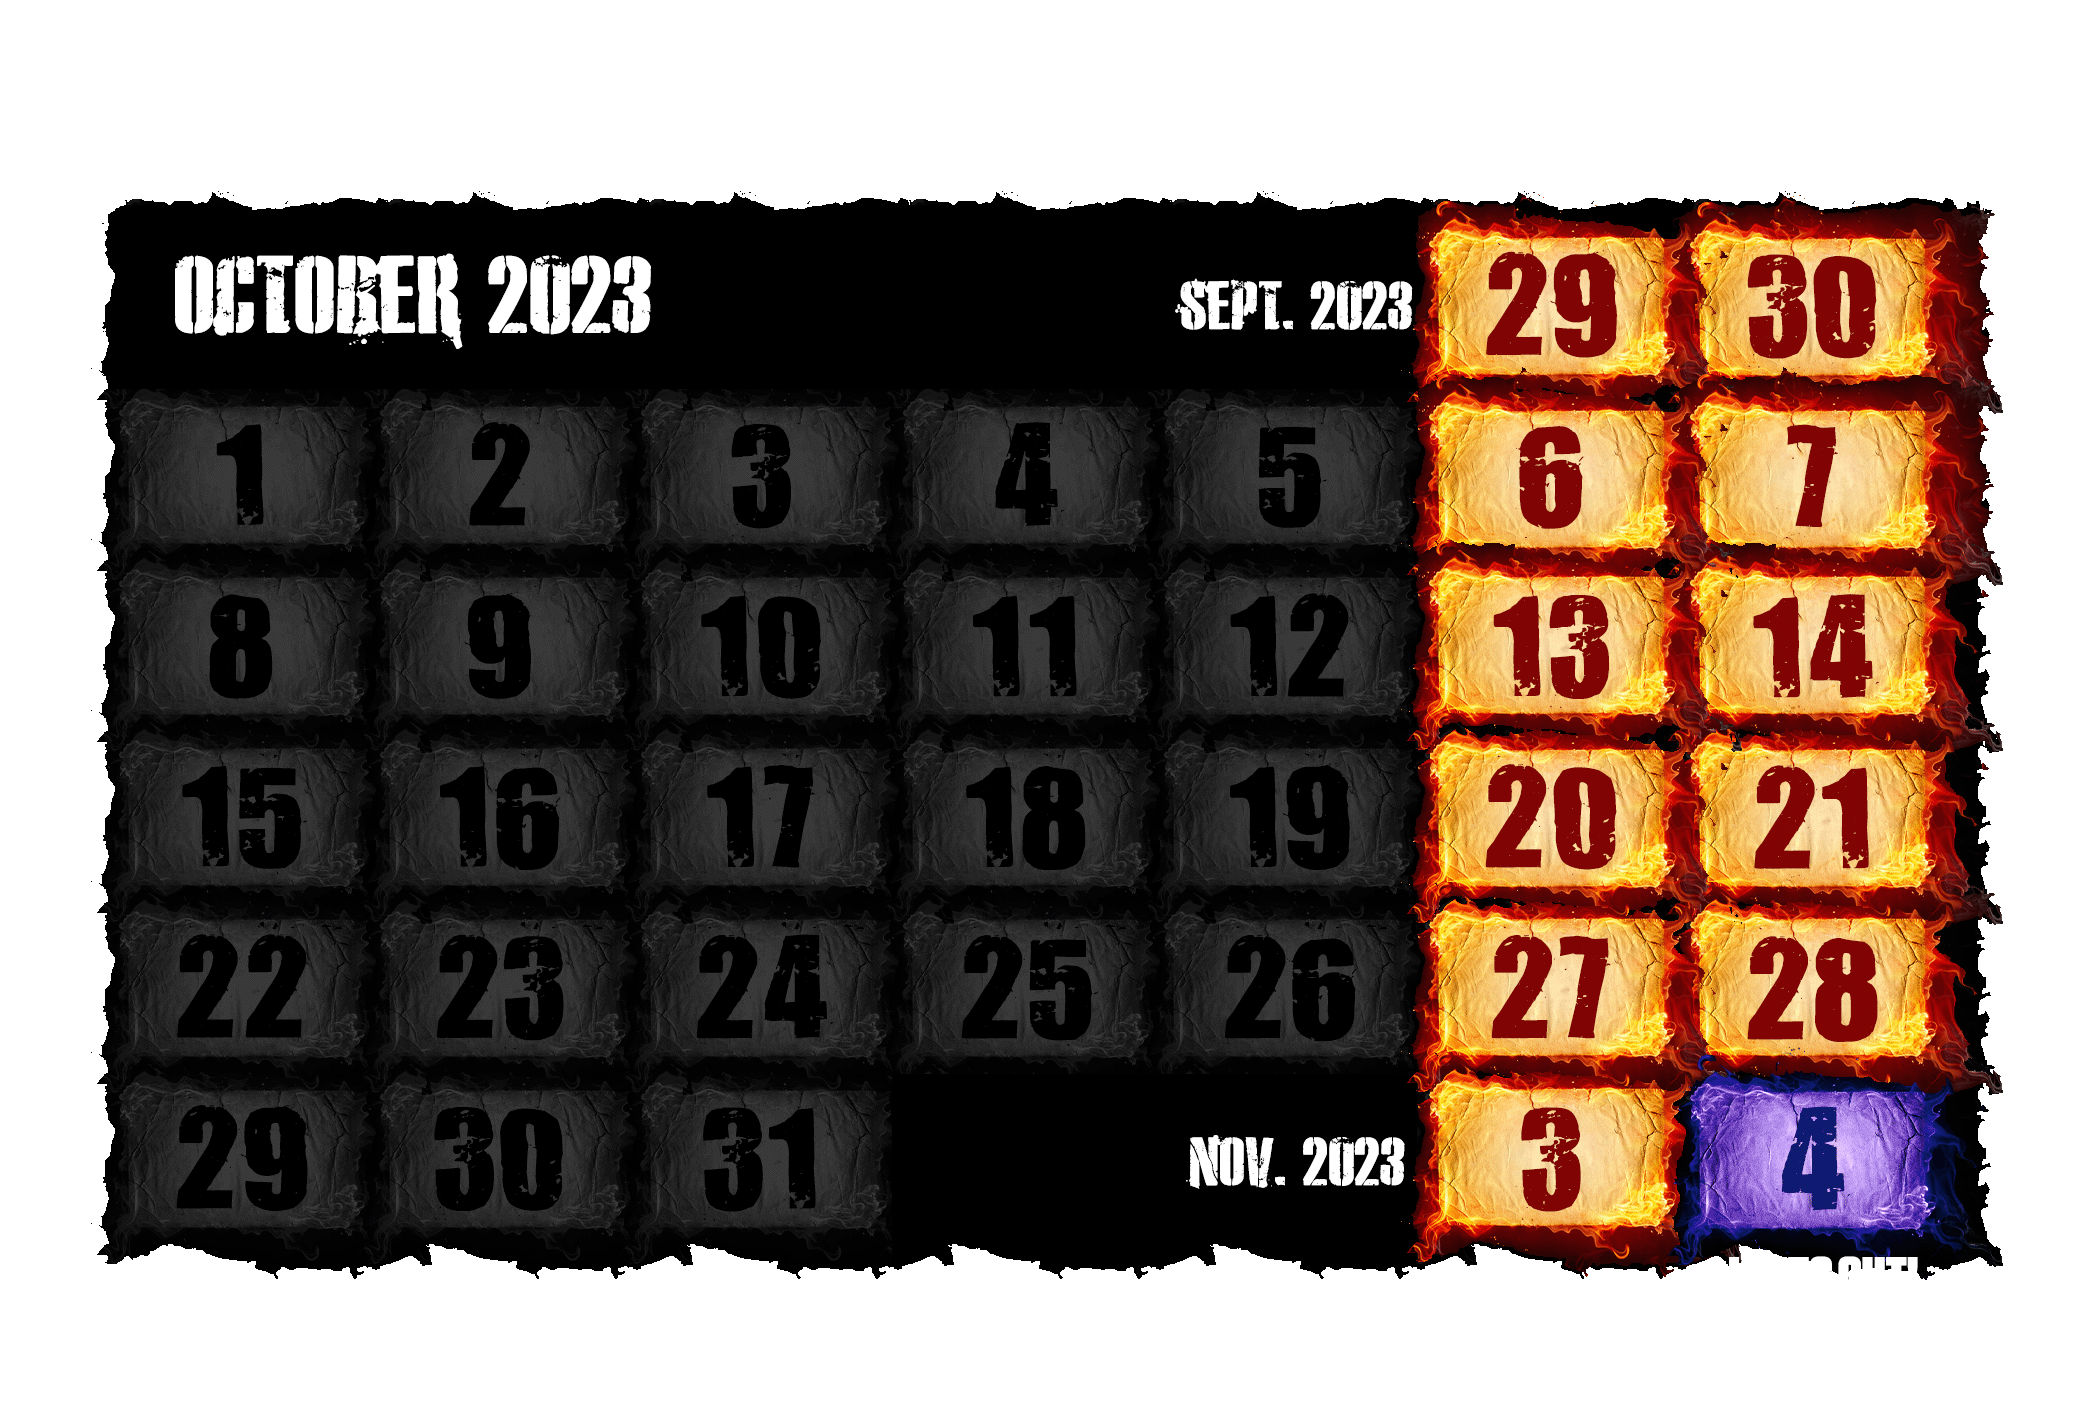 2023-calendar